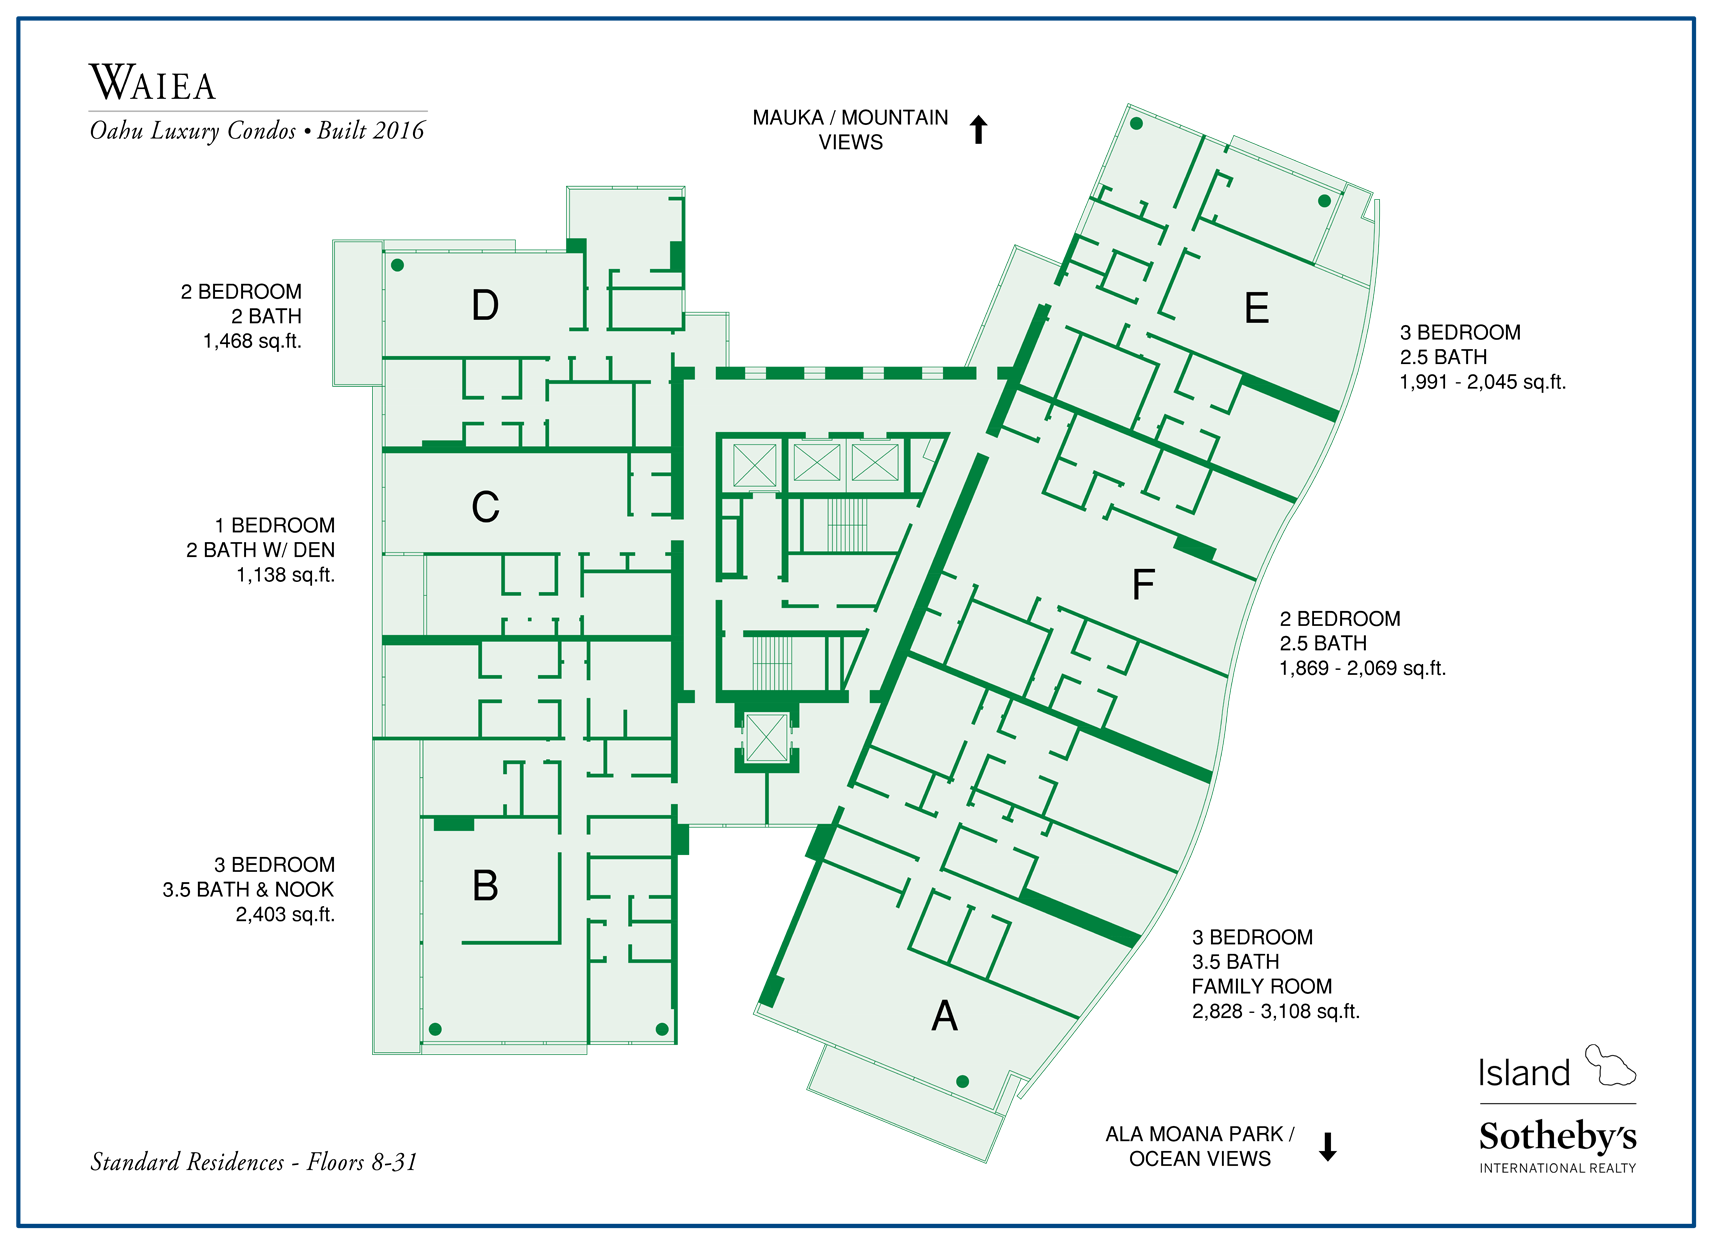 Waiea Condominium Map